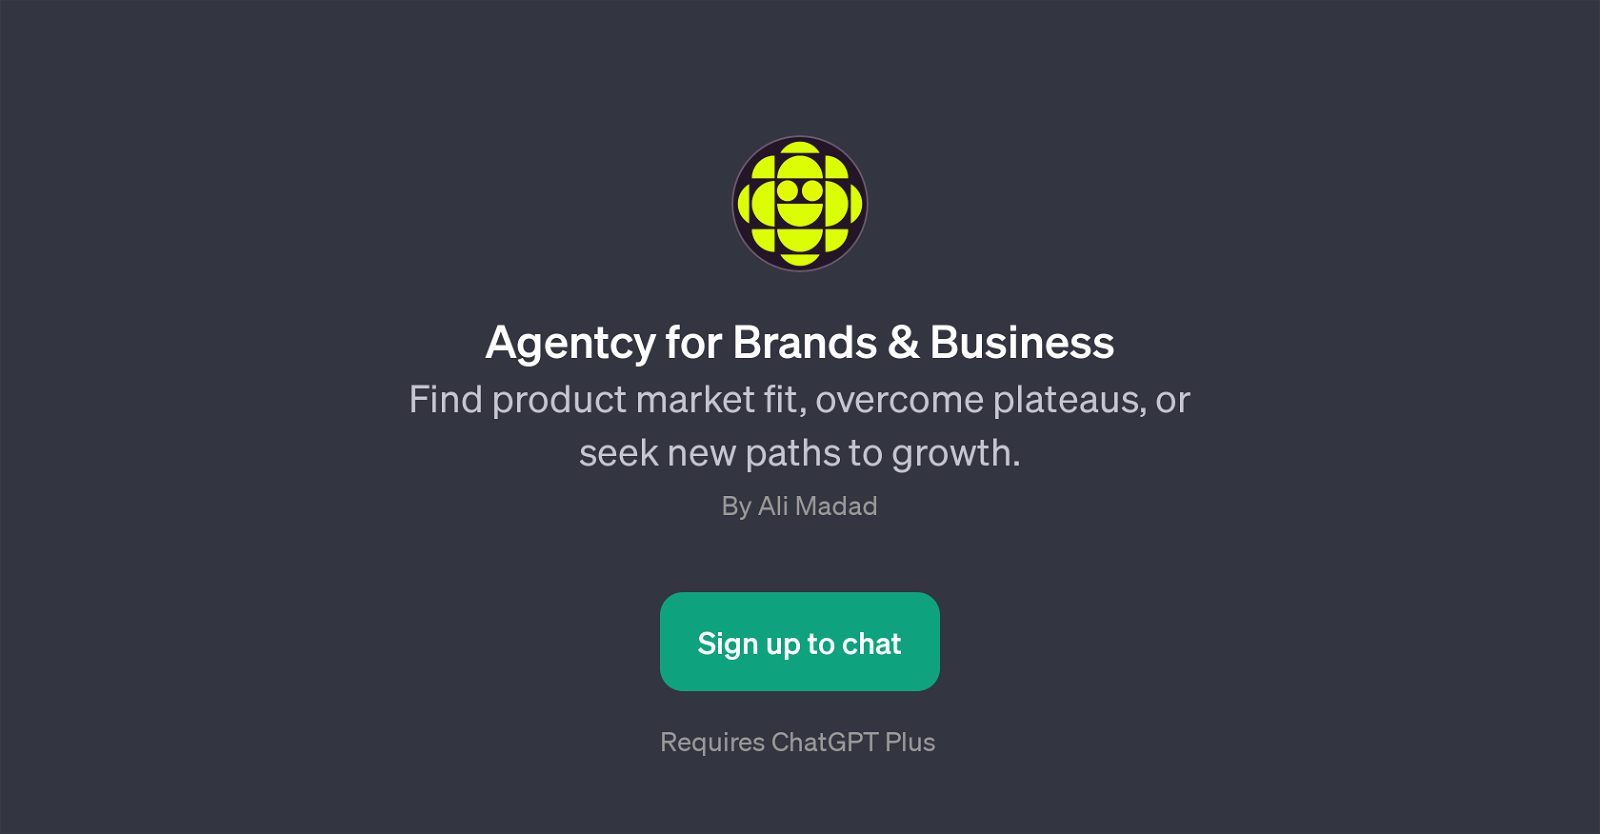 Agentcy for Brands & Business GPT website